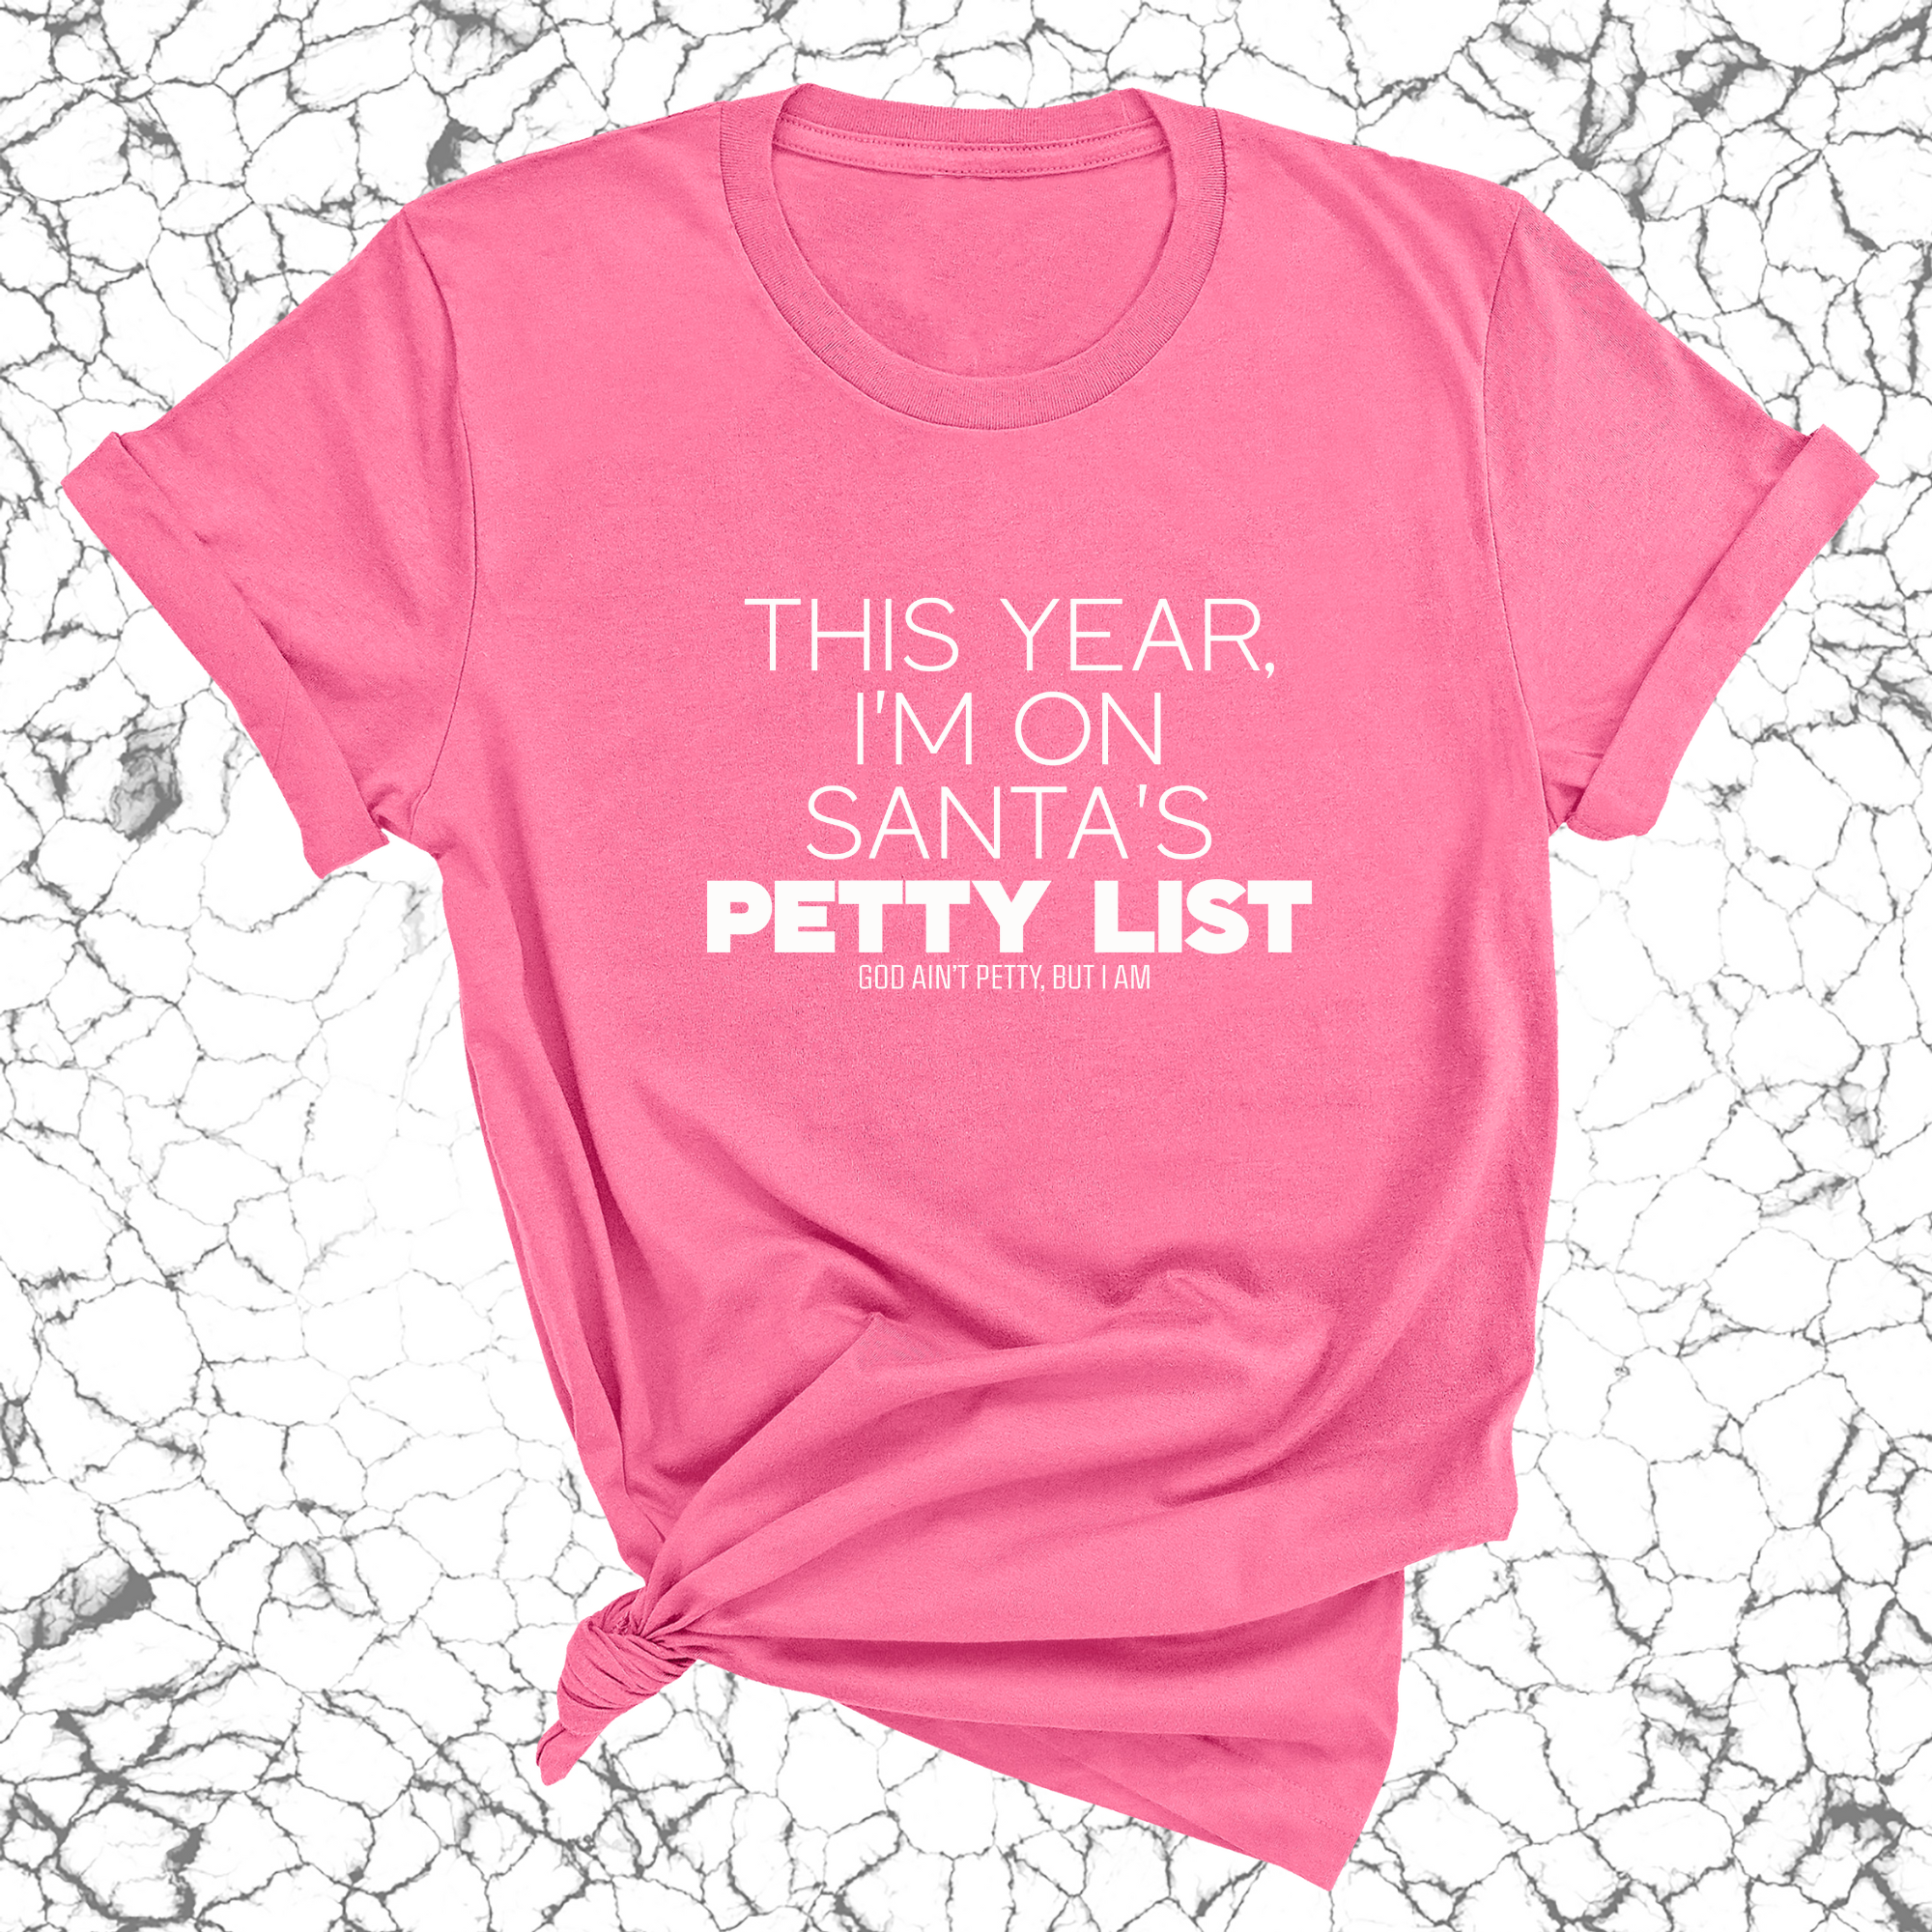 This Year I'm on Santa's Petty List Unisex Tee-T-Shirt-The Original God Ain't Petty But I Am